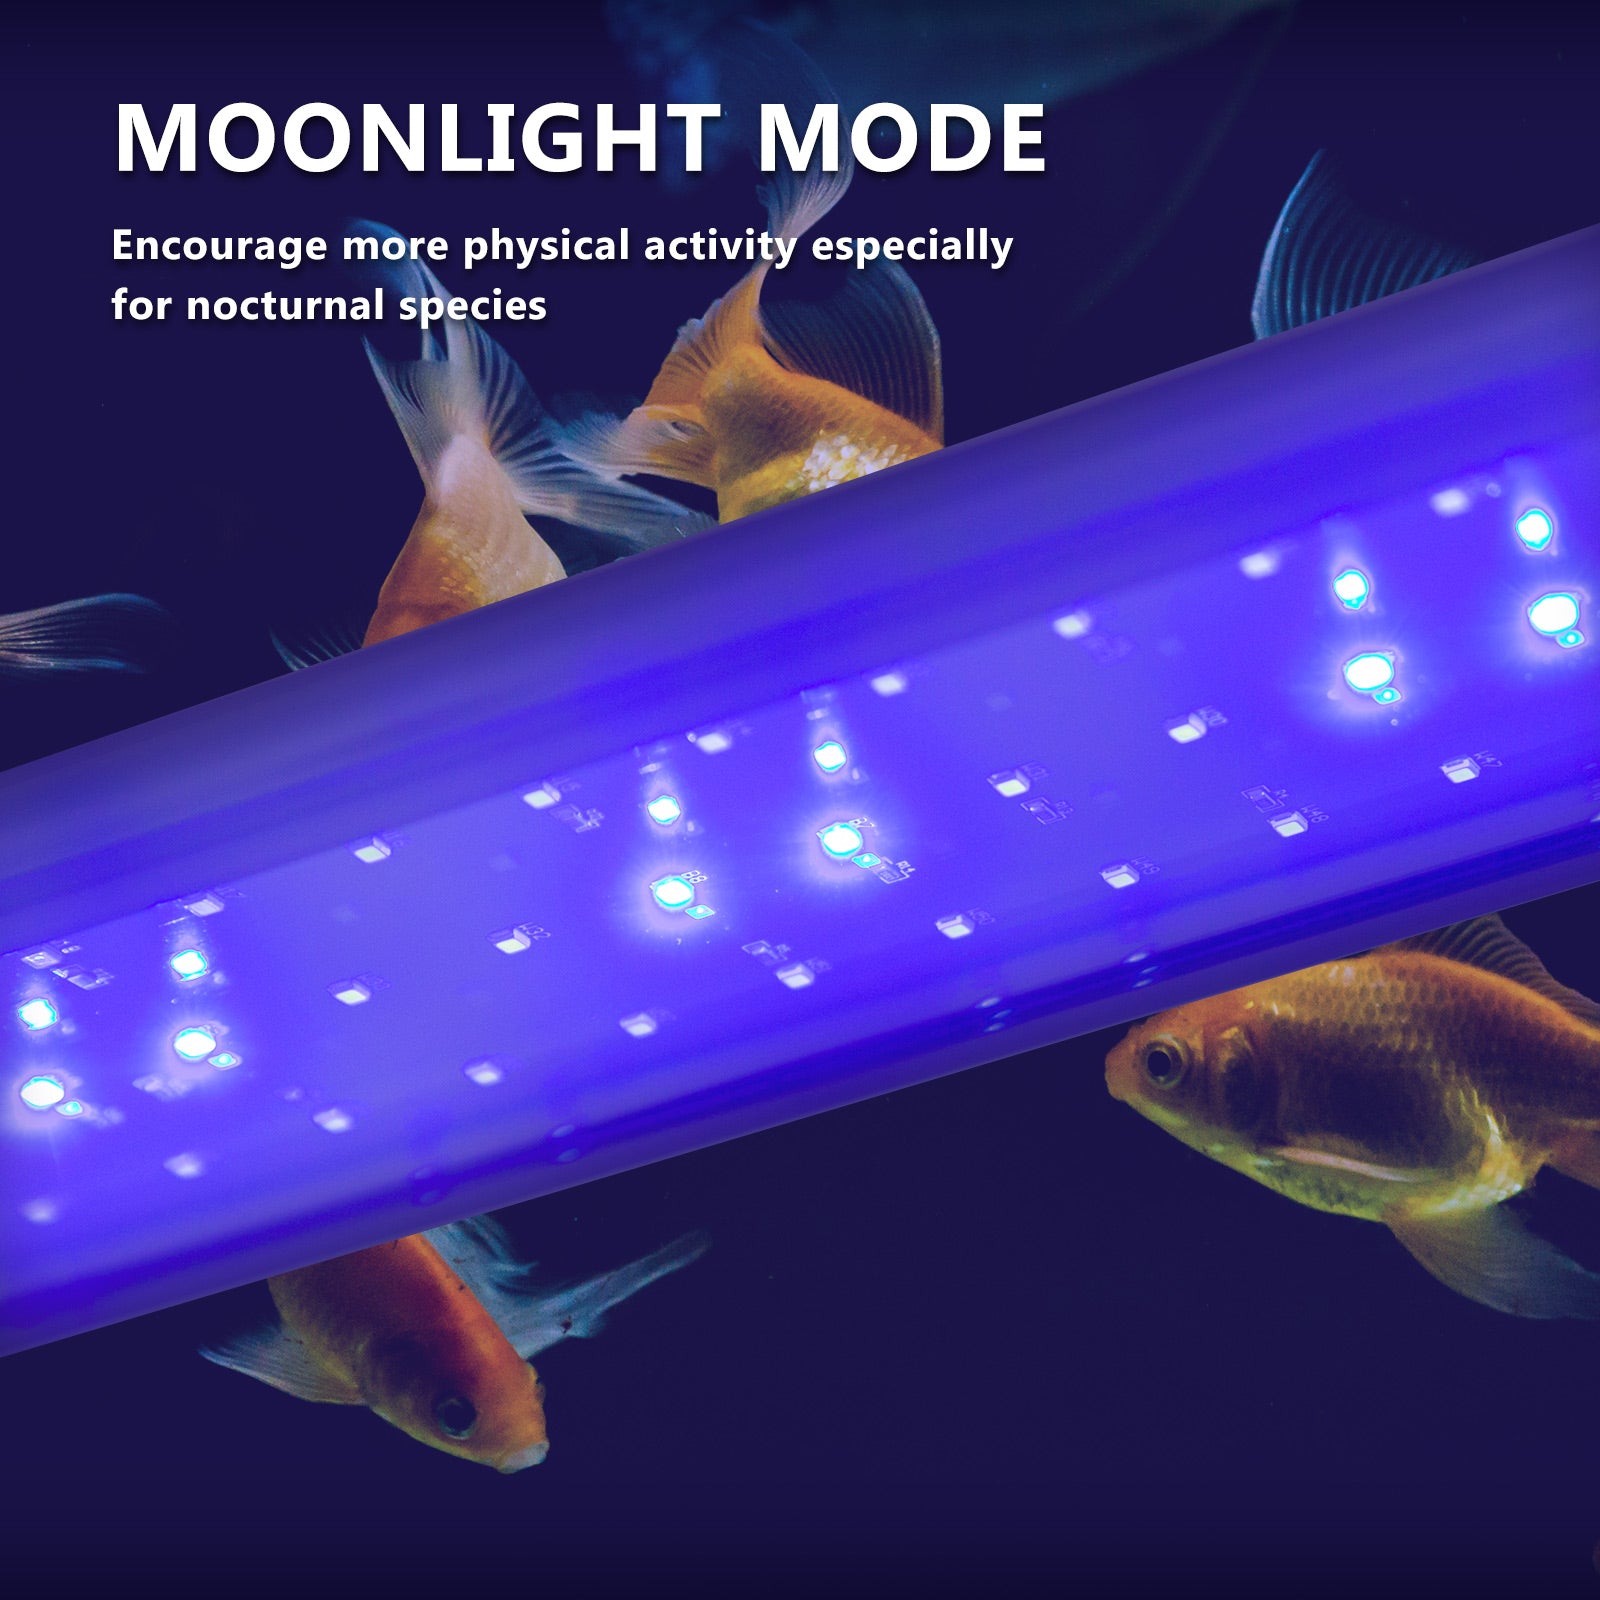 6W Aquarium Blue White LED Light for Tank 30-50cm